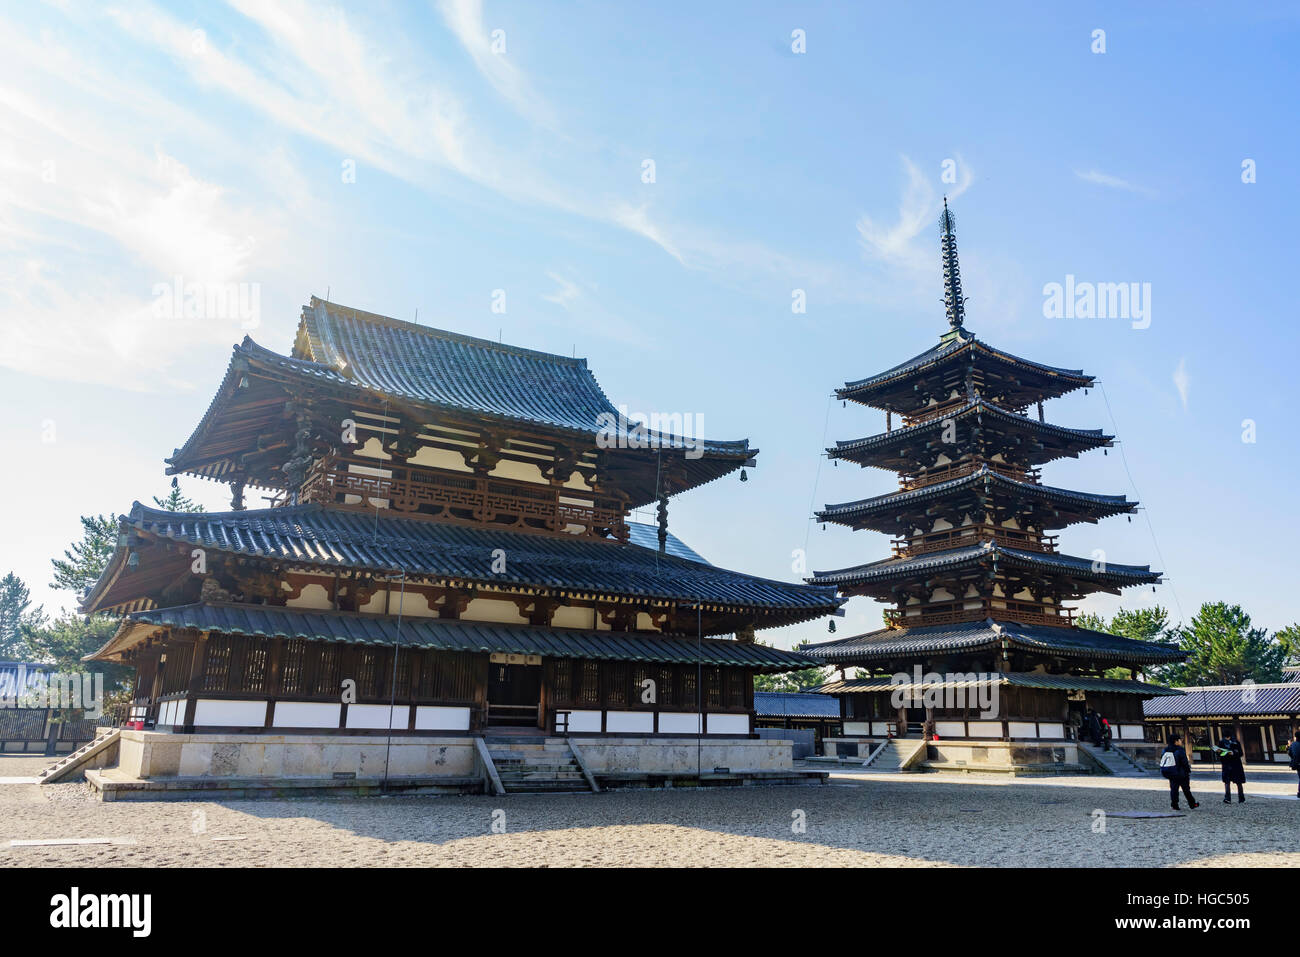 Nara, DEC 17: The historical Horyu Ji (Temple of the Flourishing Law) on DEC 17, 2016 at Nara, Japan Stock Photo